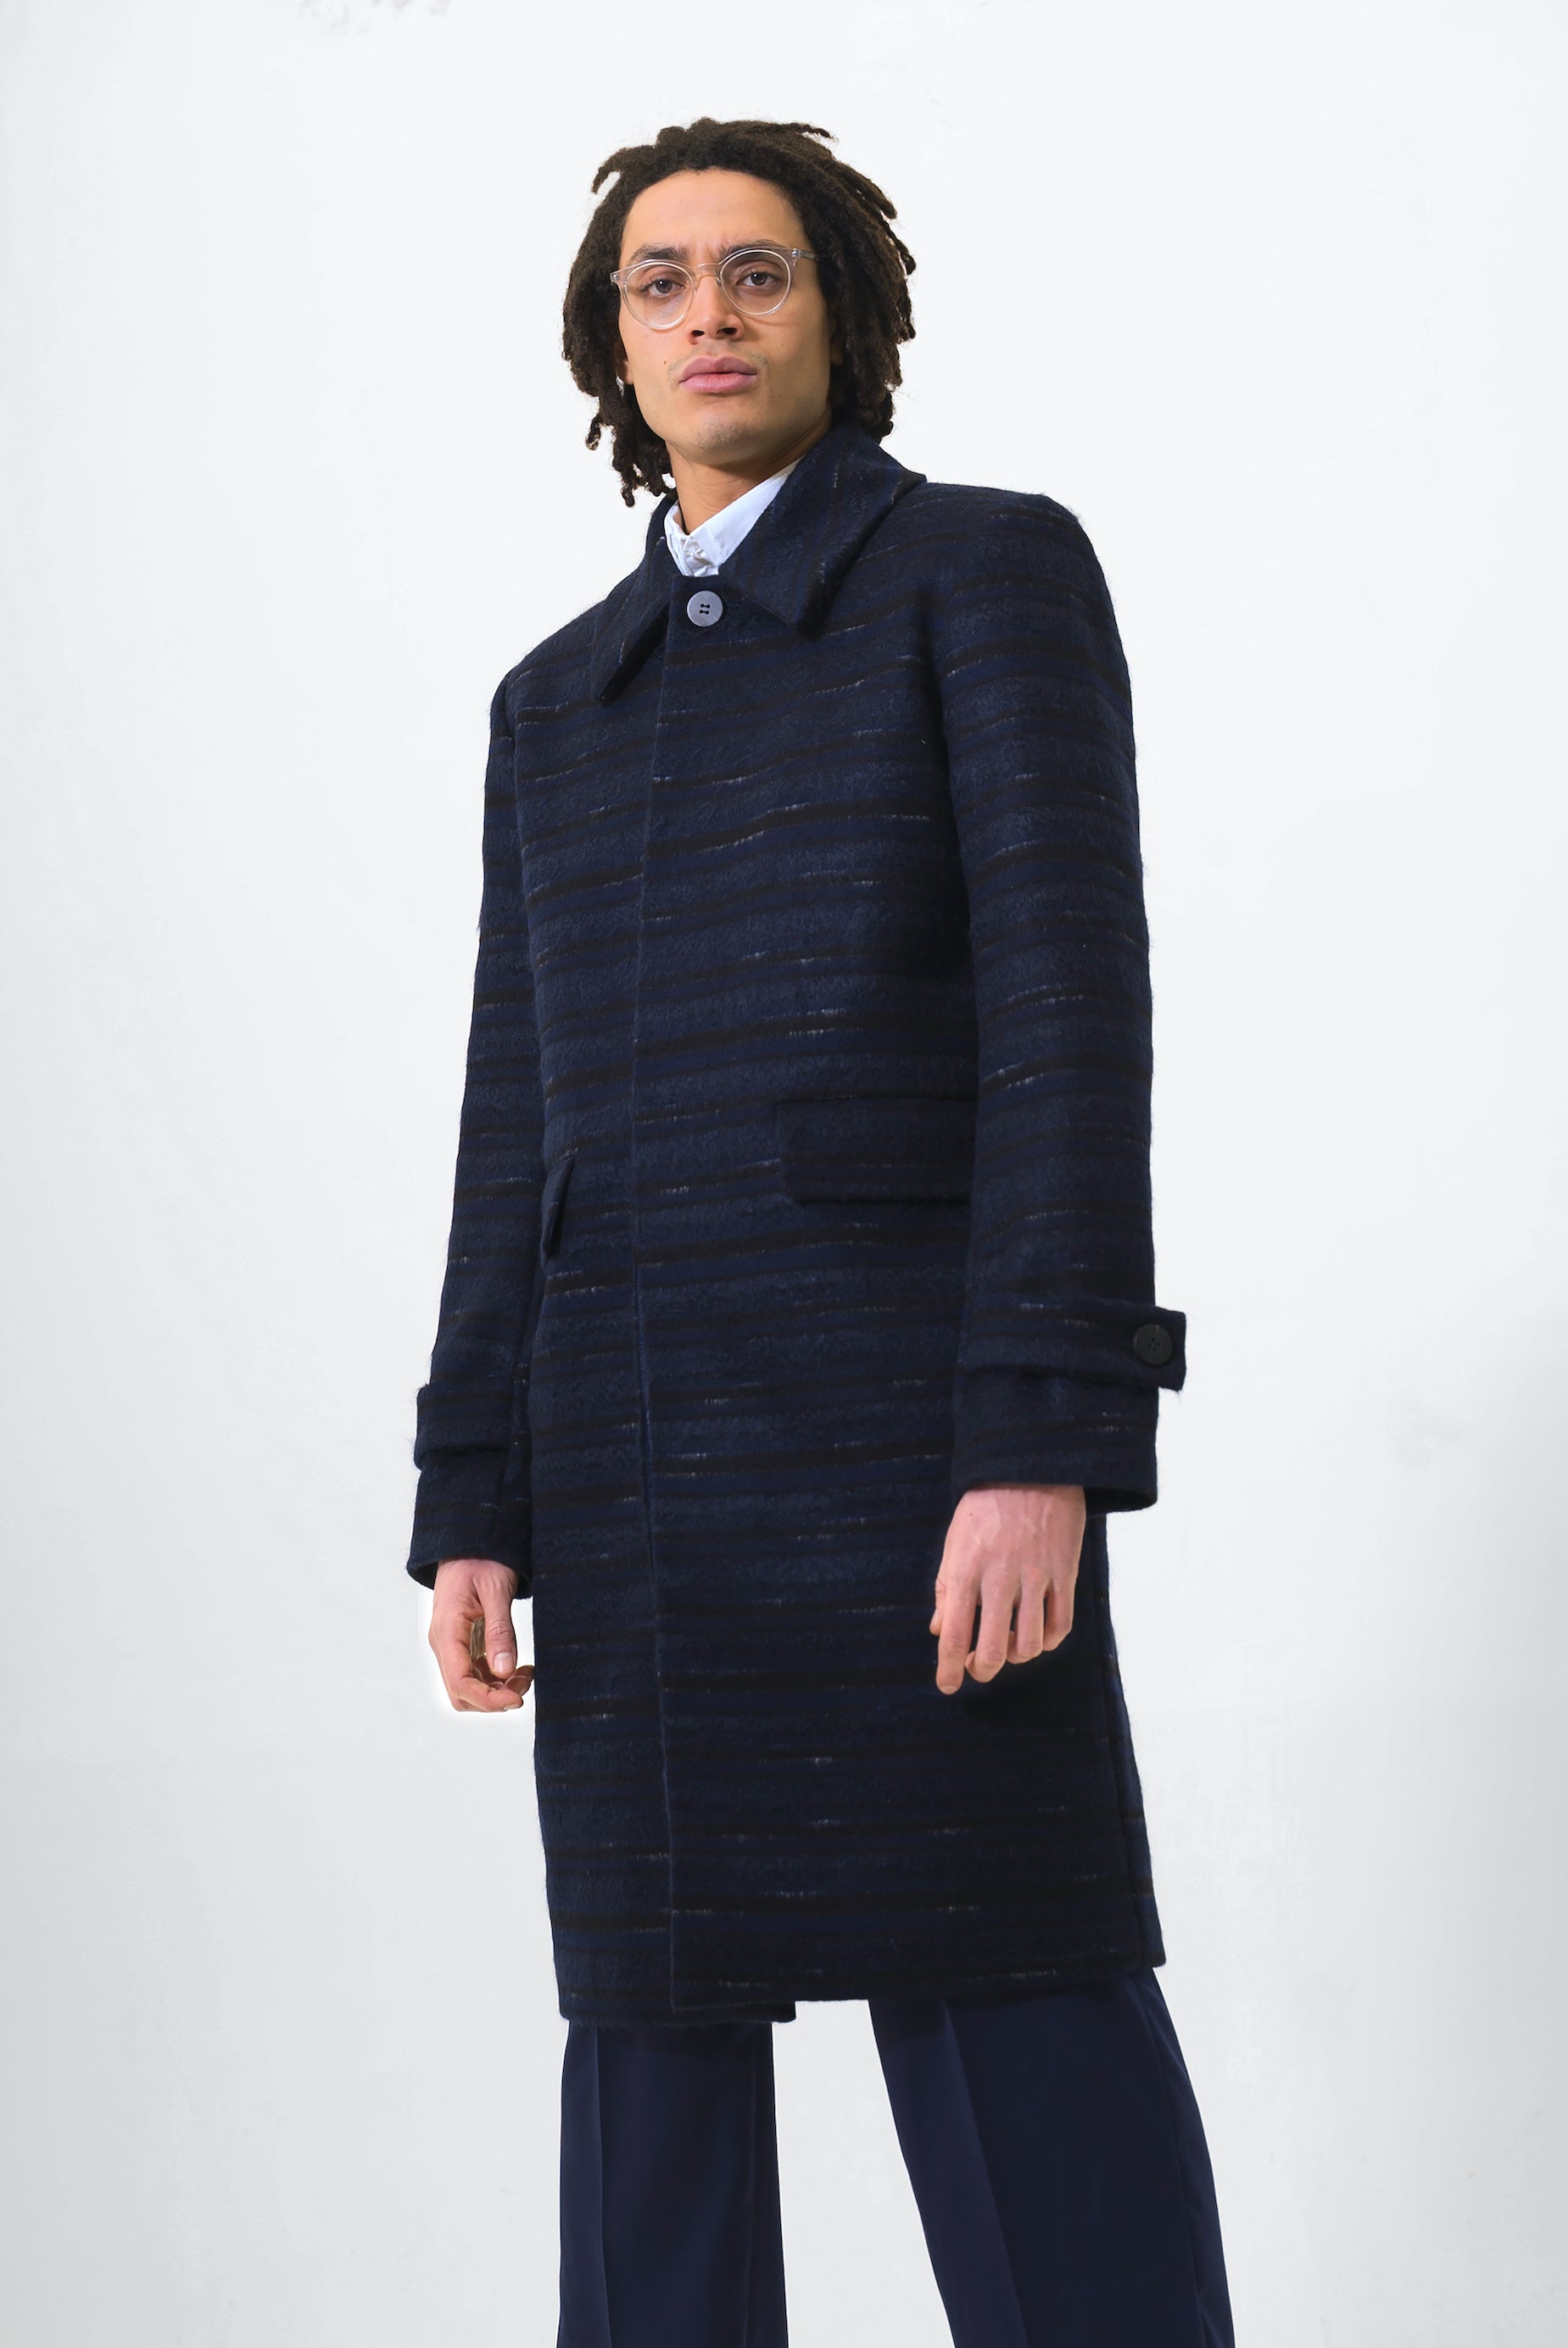 Vulturine Blue Wool Blend Coat (Exclusive to Website)